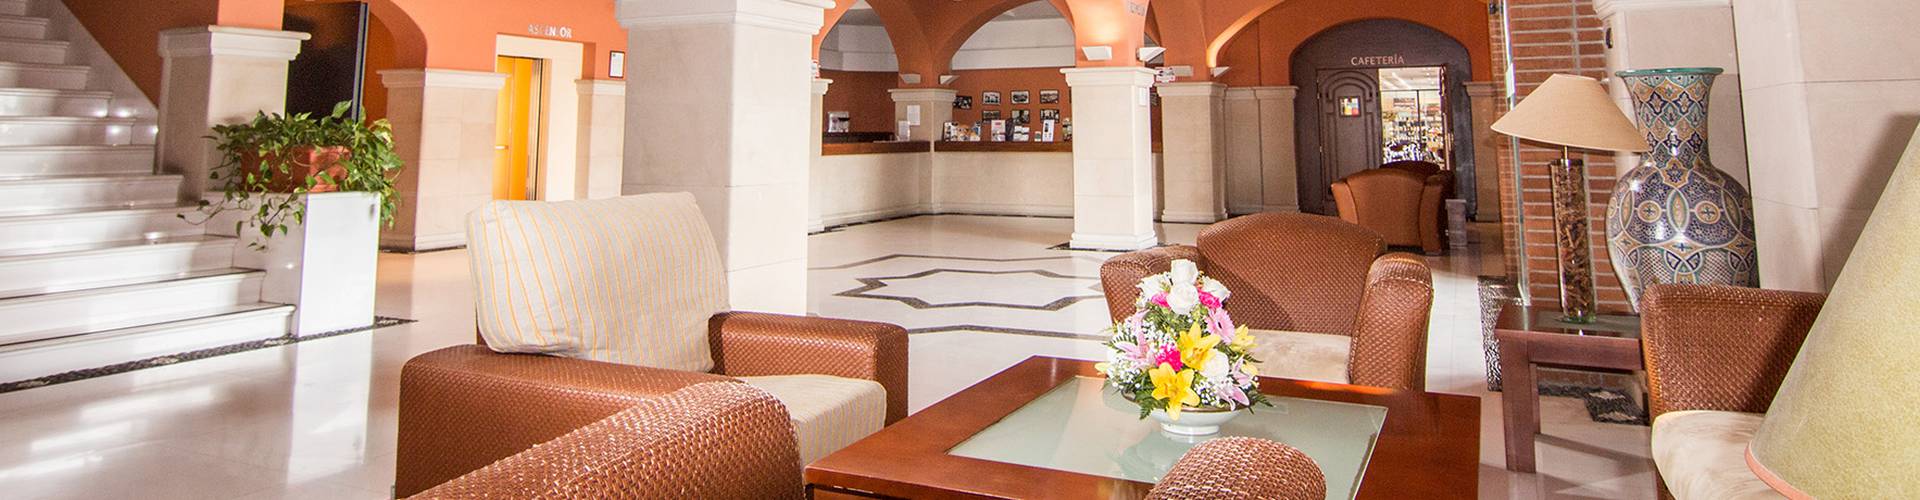 Abades Hotels - Guadix - 